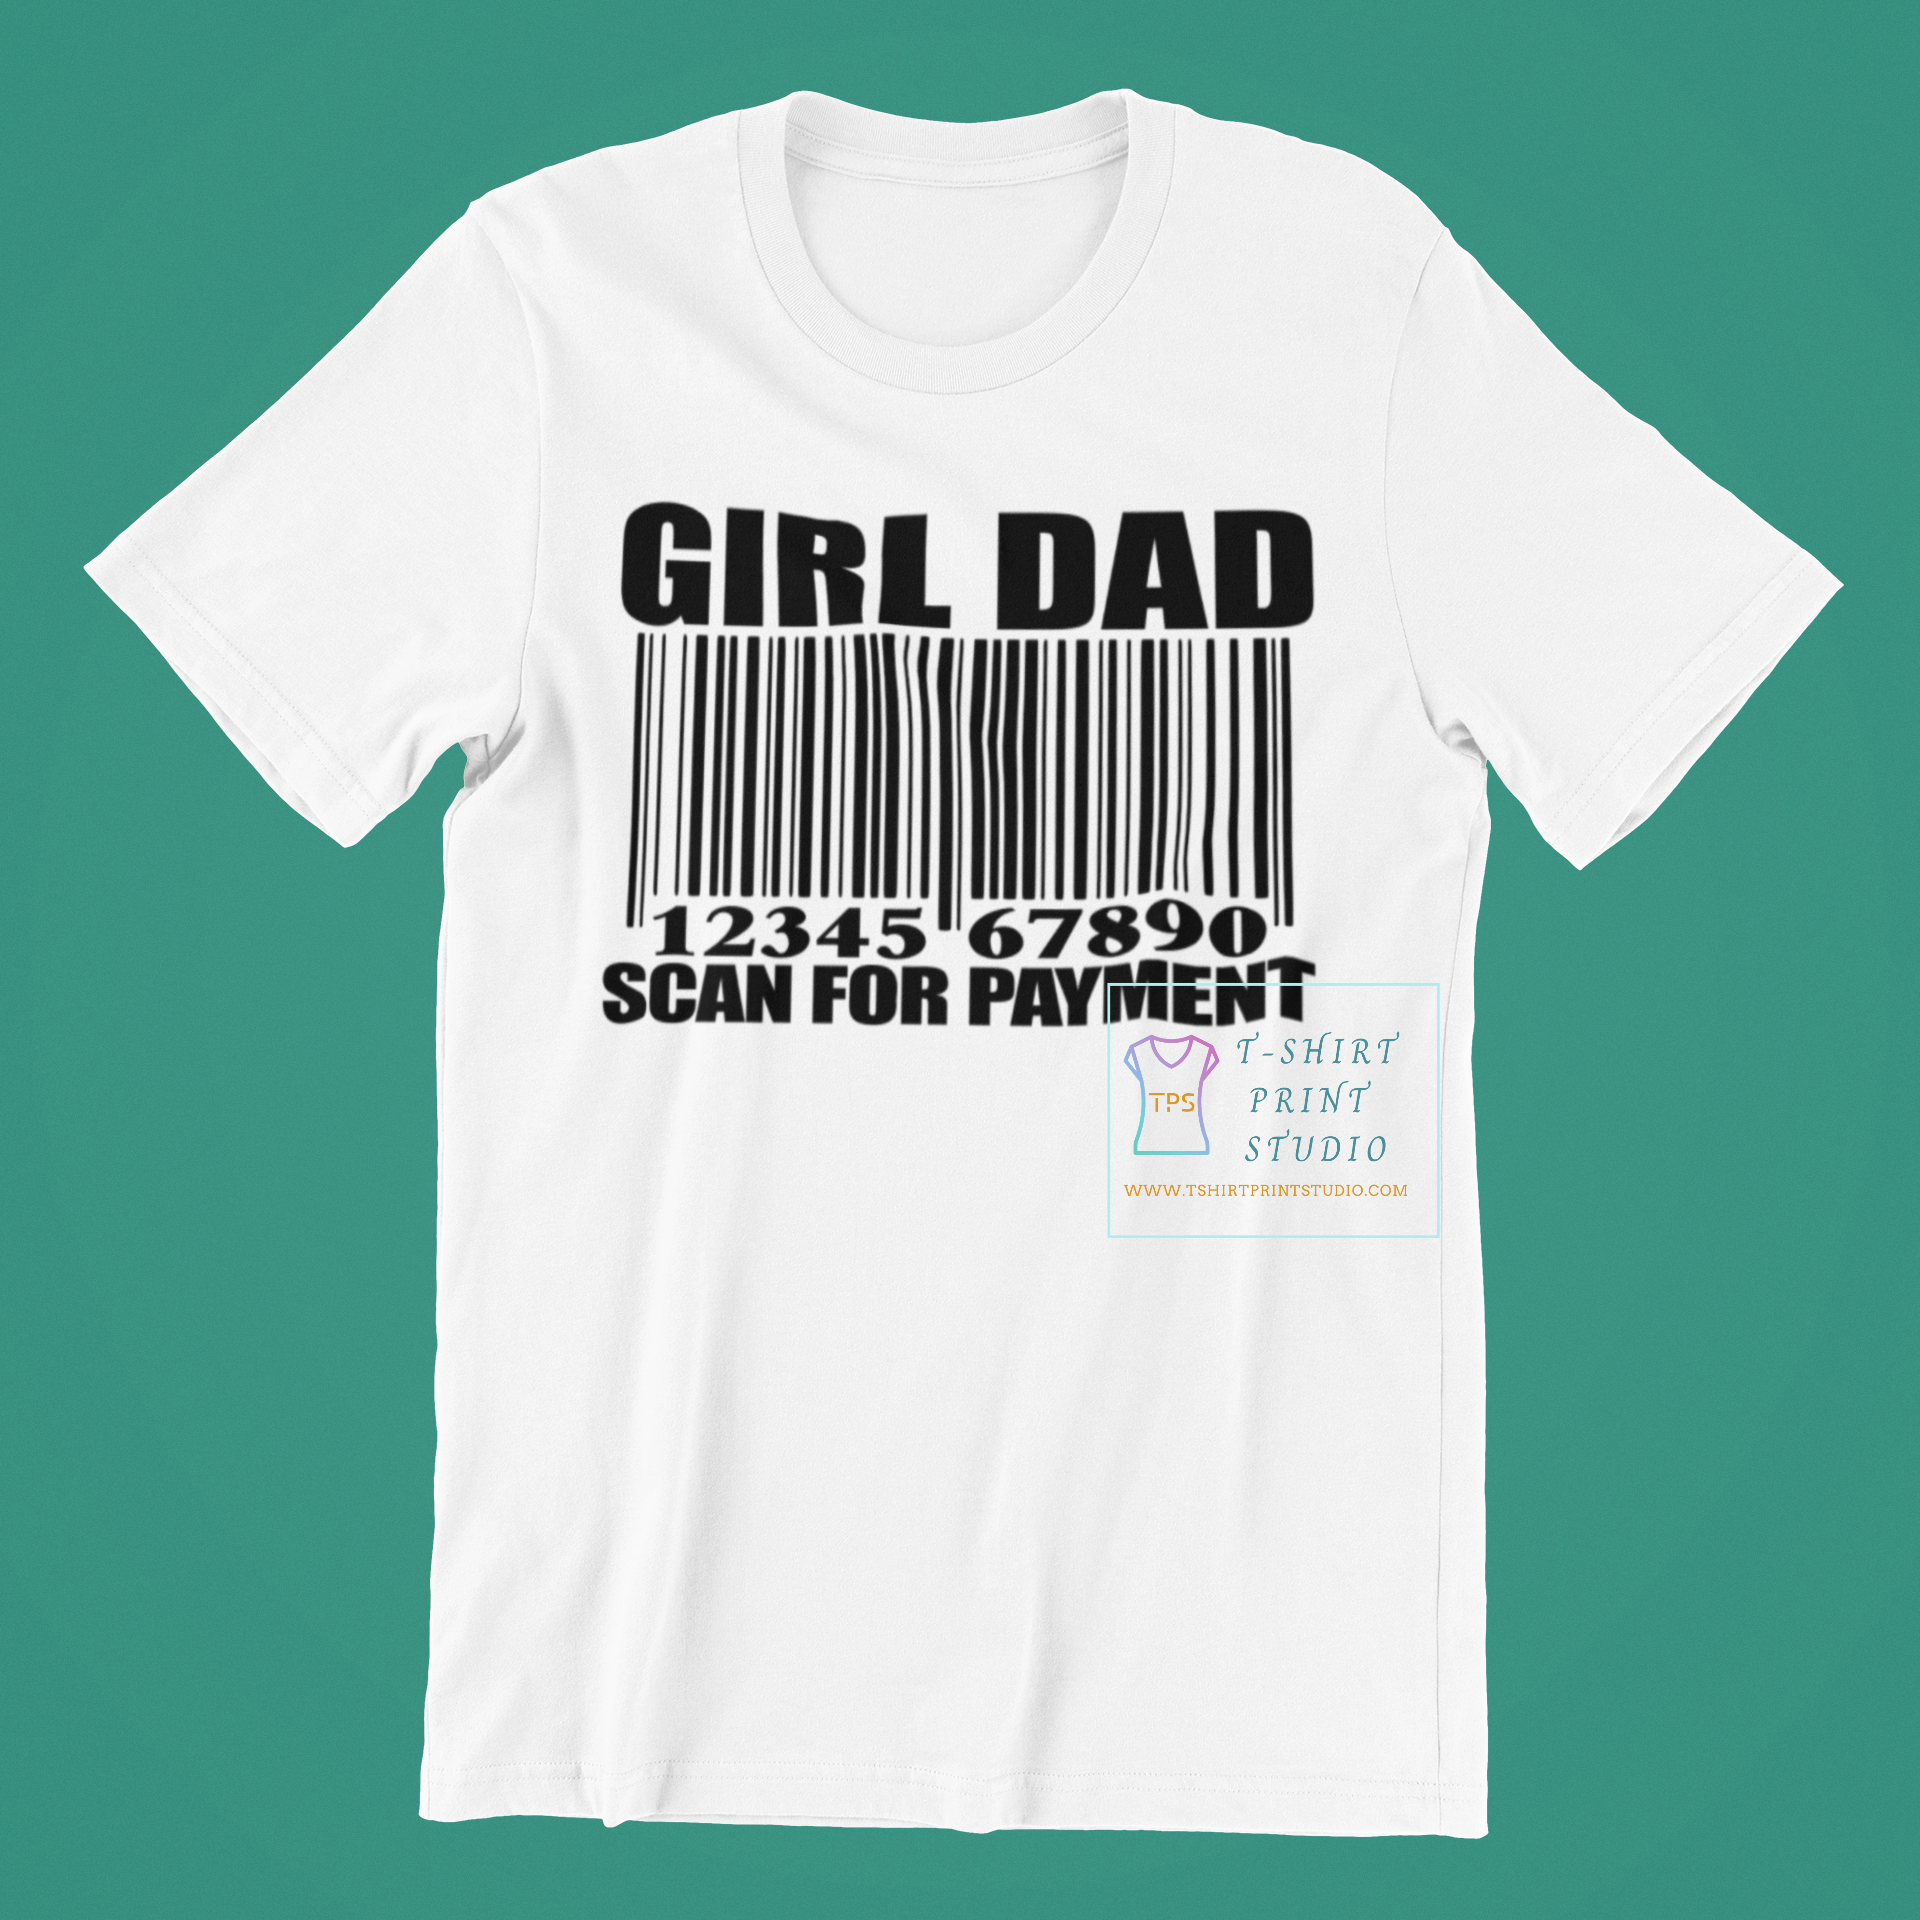 Girl Dad Shirt, Dad of Girl T-Shirt